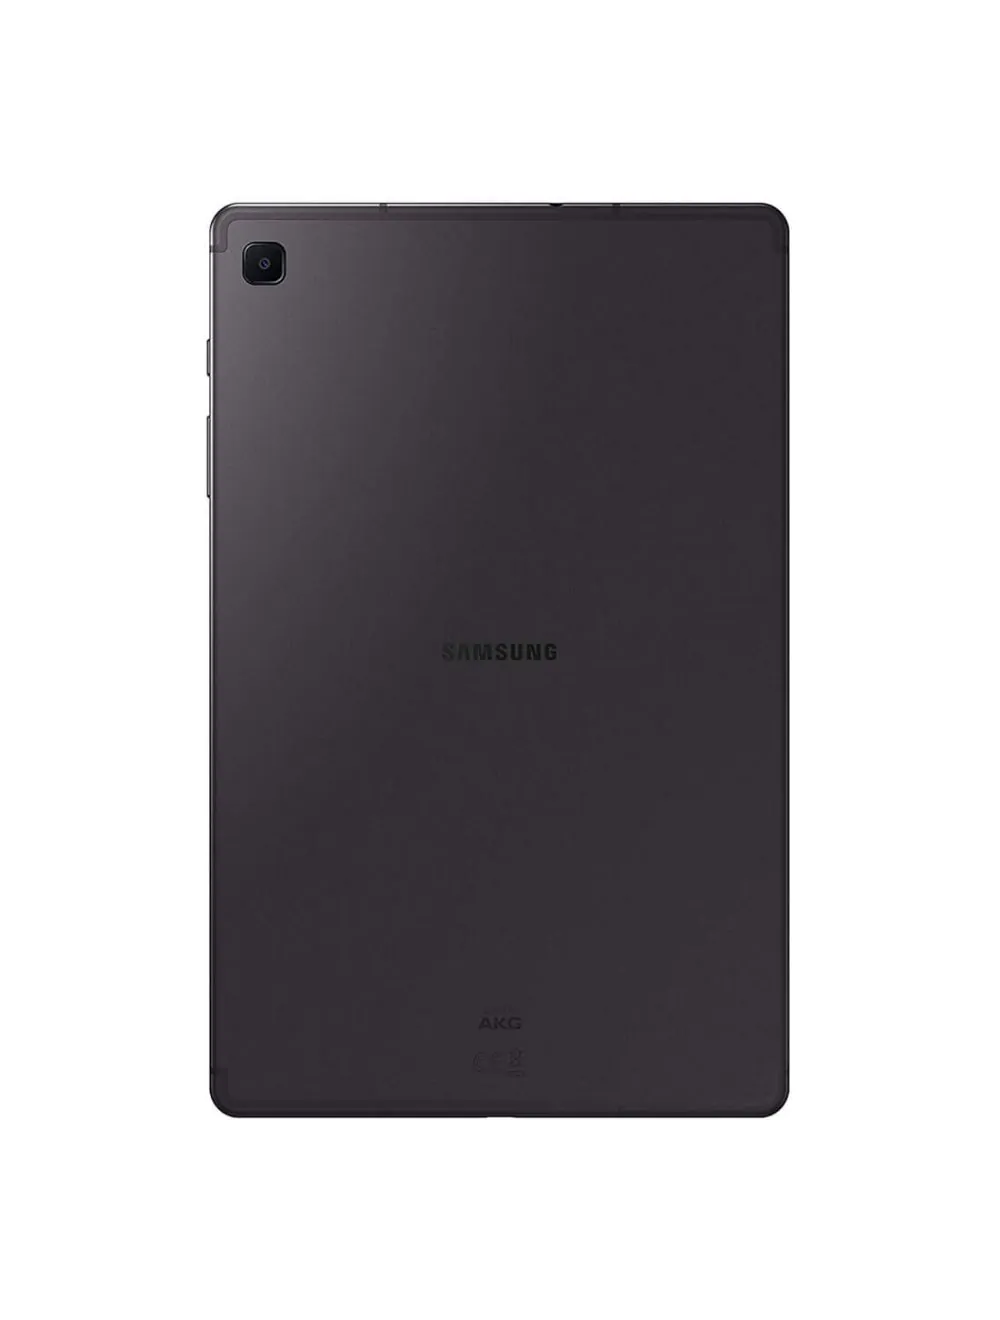 Samsung Galaxy Tab S6 Lite Wi-Fi, Tablette